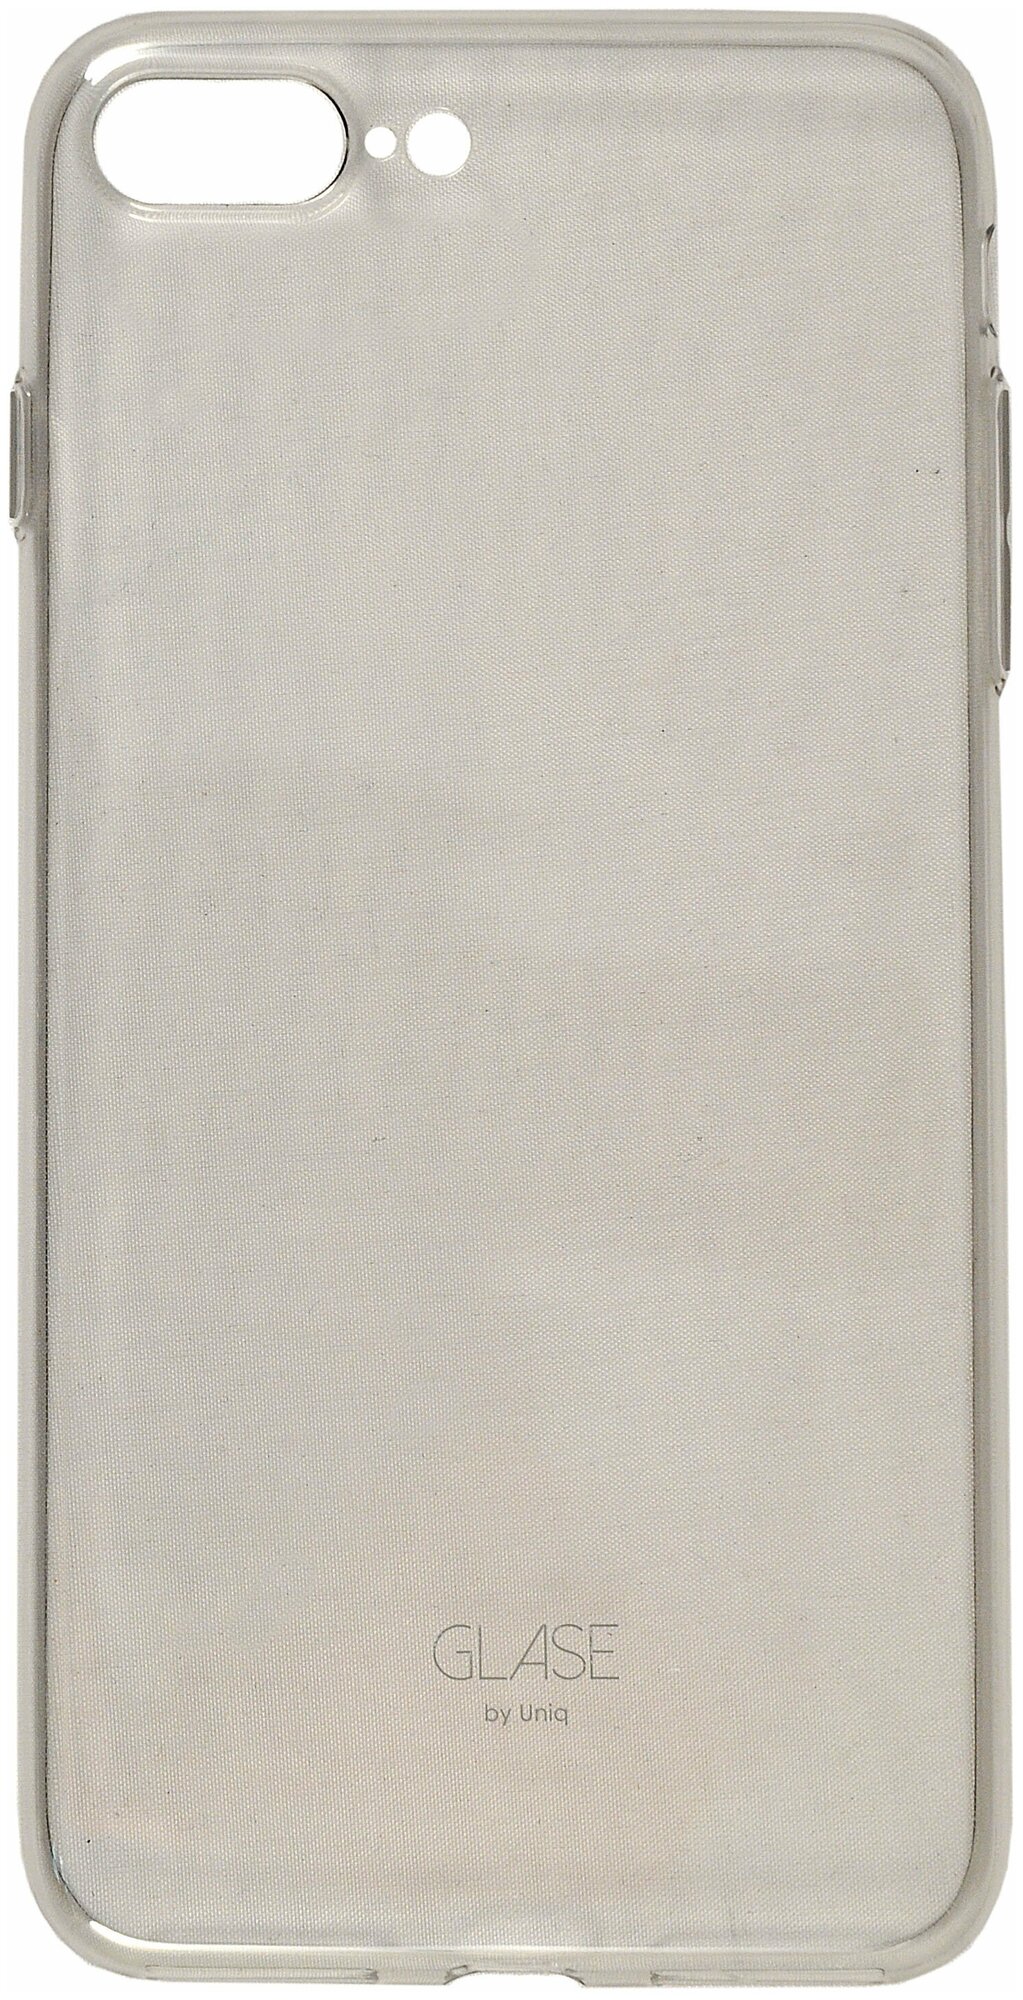 Чехол Uniq для iPhone 7 Plus/8 Plus Glase Grey